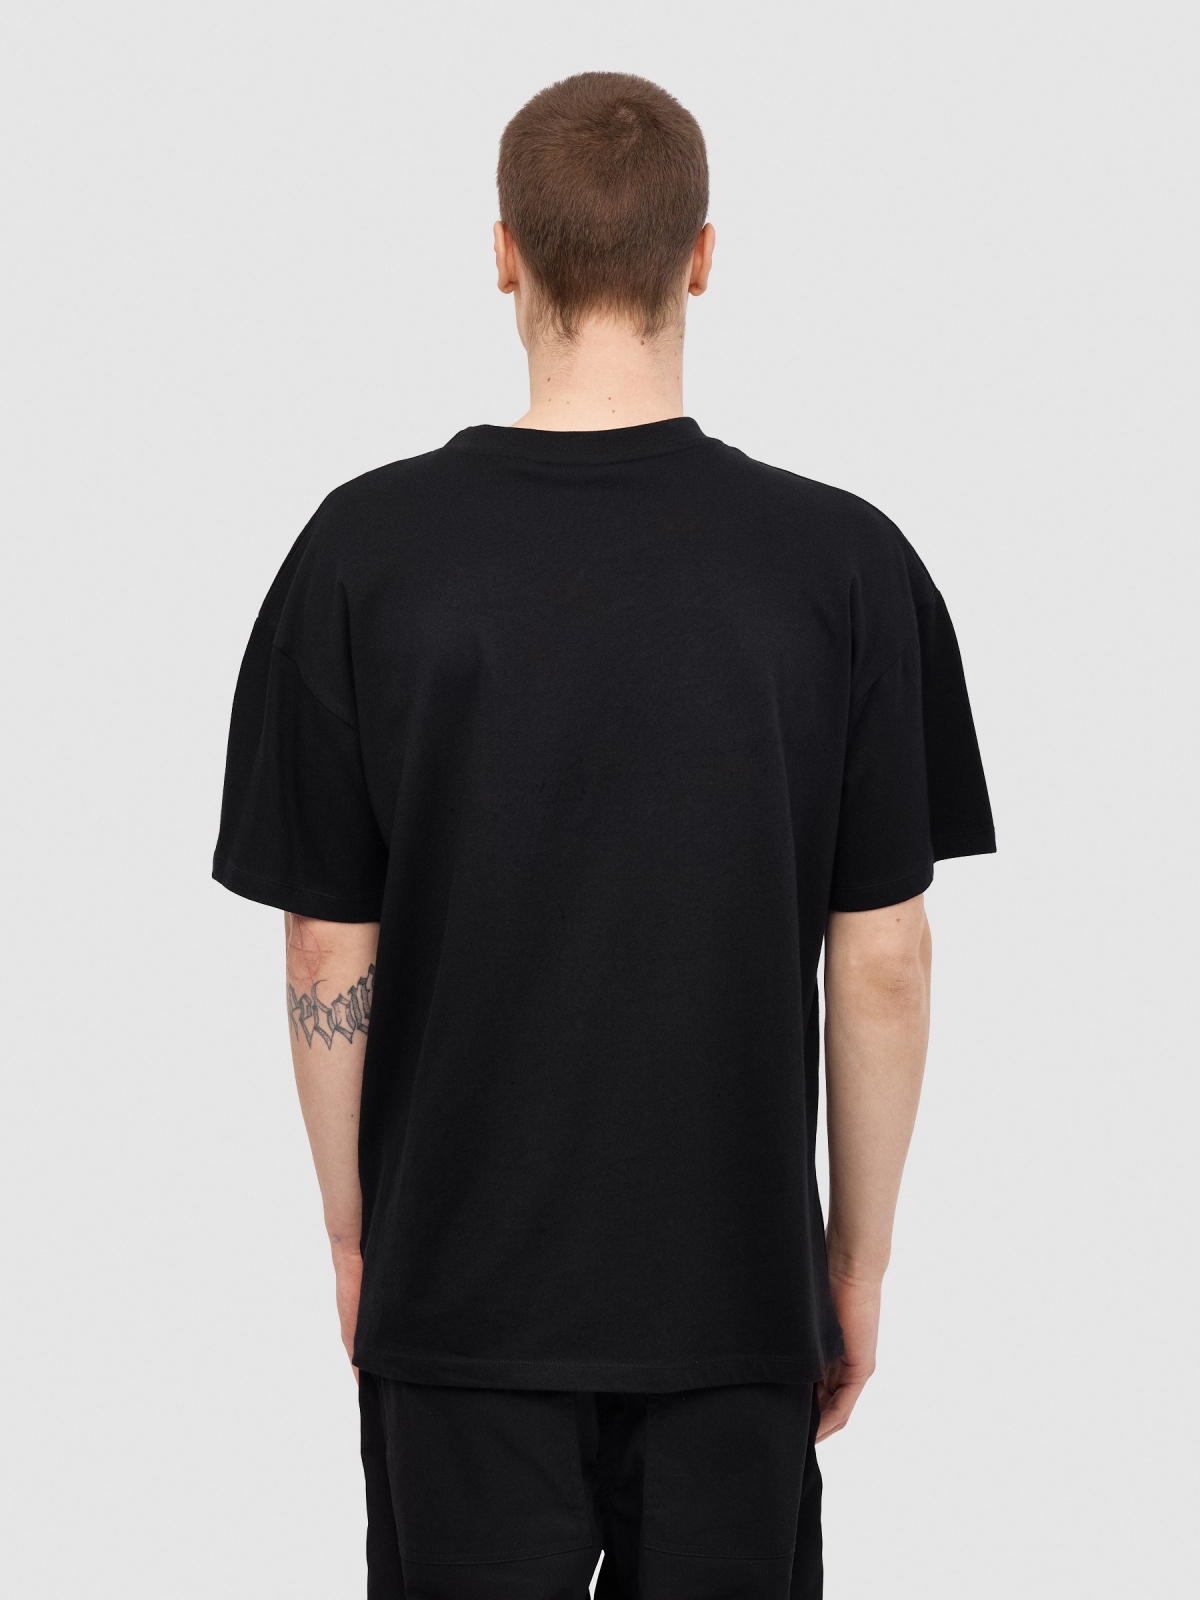 The Mandalorian Grogu T-shirt black middle back view